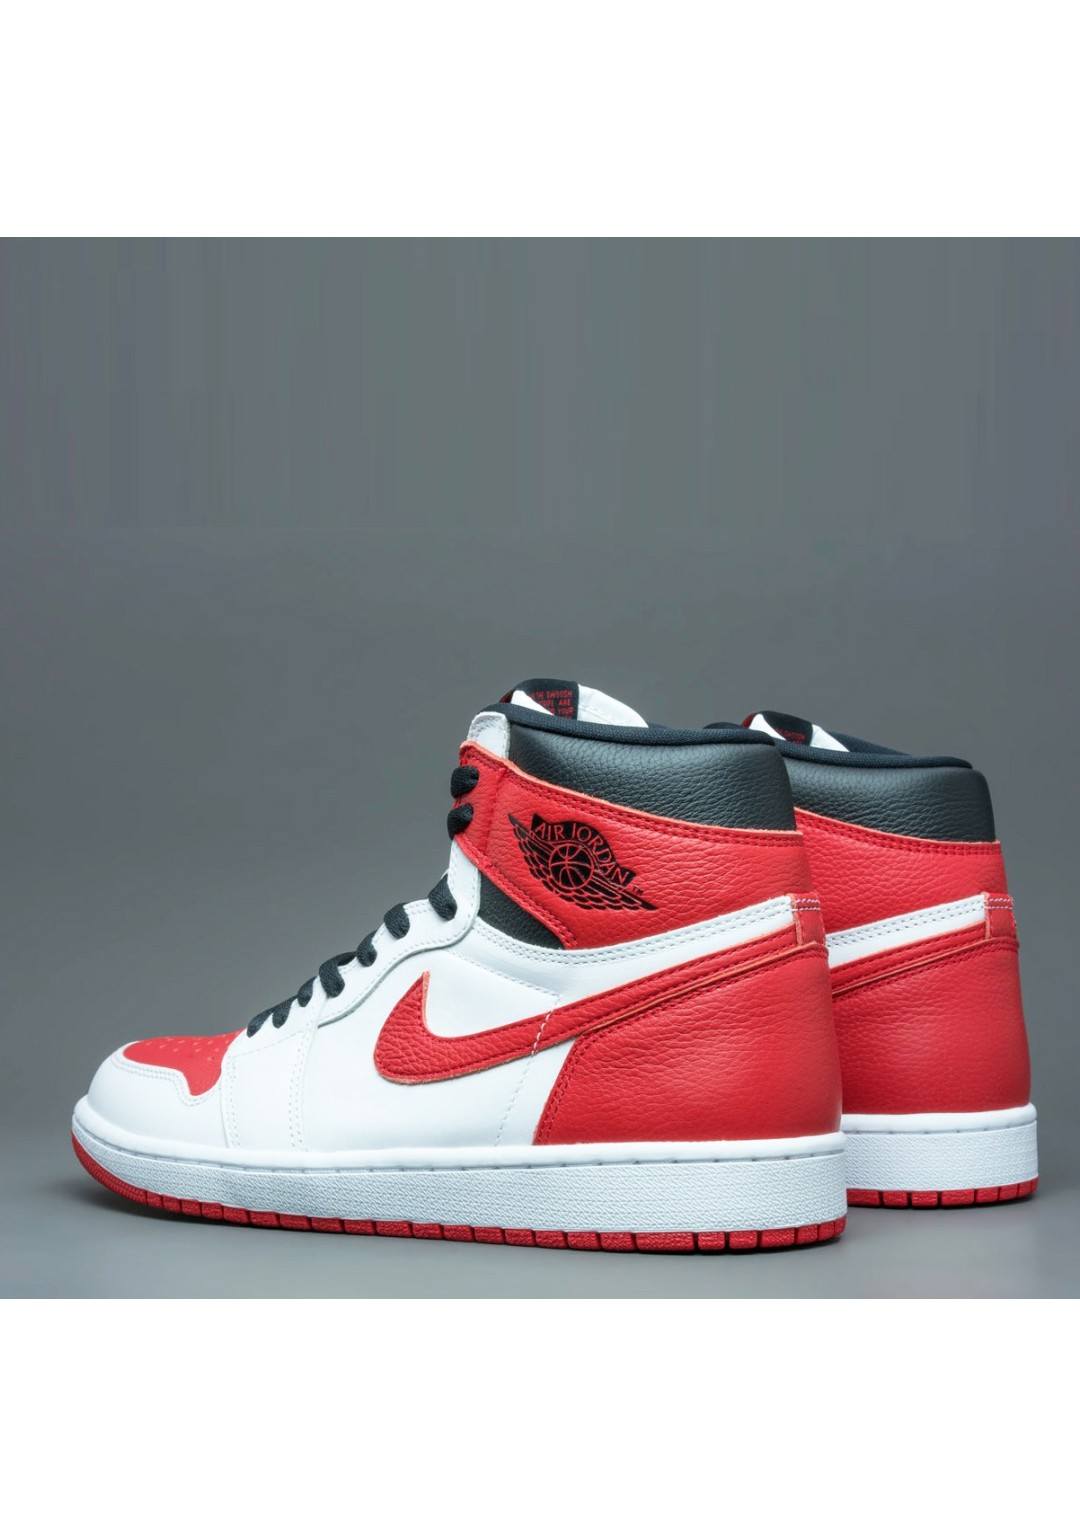 Nike Jordan 1 retro high